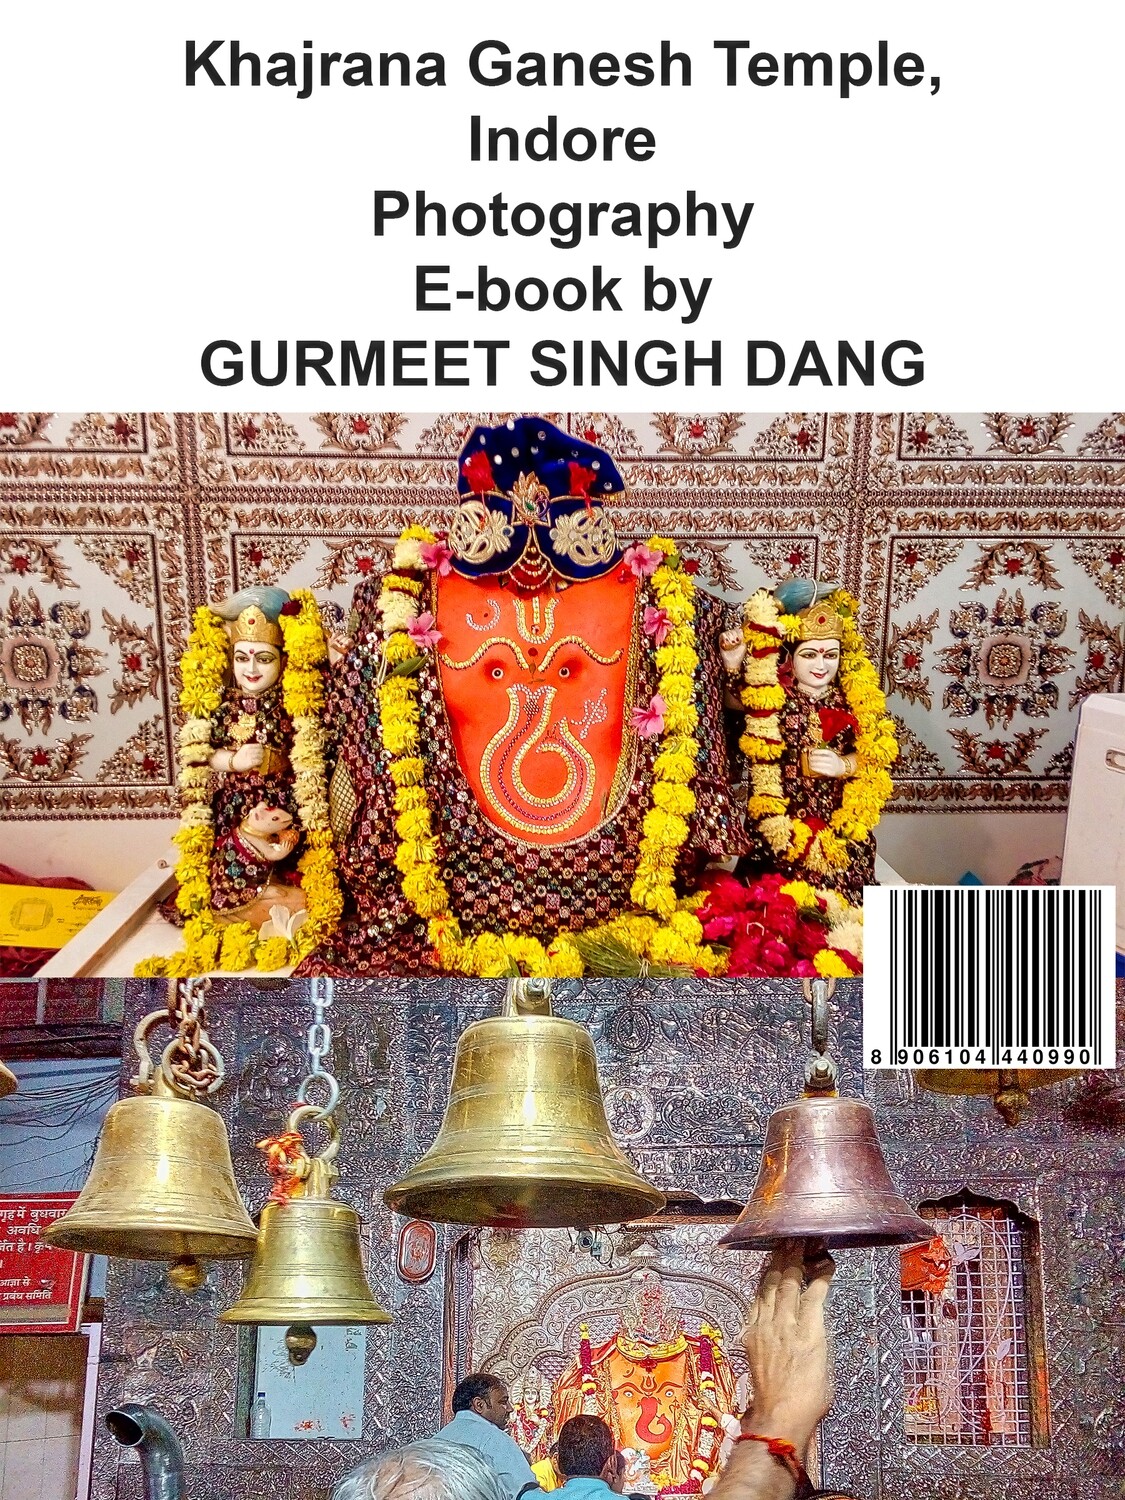 Khajrana Ganesh Temple, Indore Photography E-book by GURMEET SINGH DANG